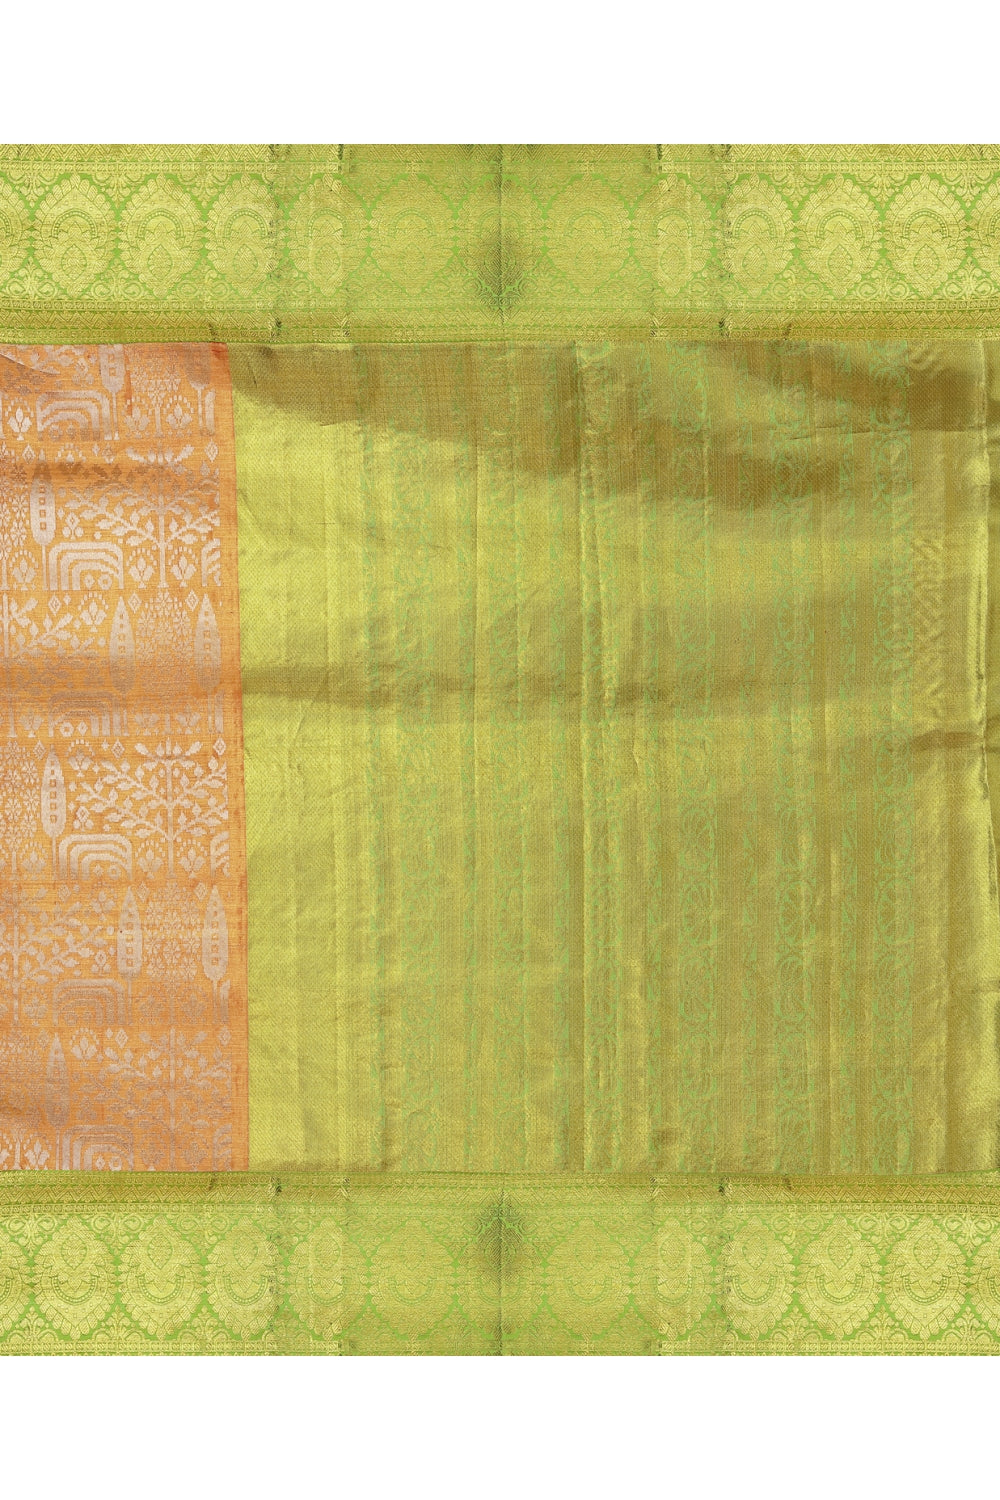 Tangerine Real Jari Golden Silk Kanjeevaram Saree Devam